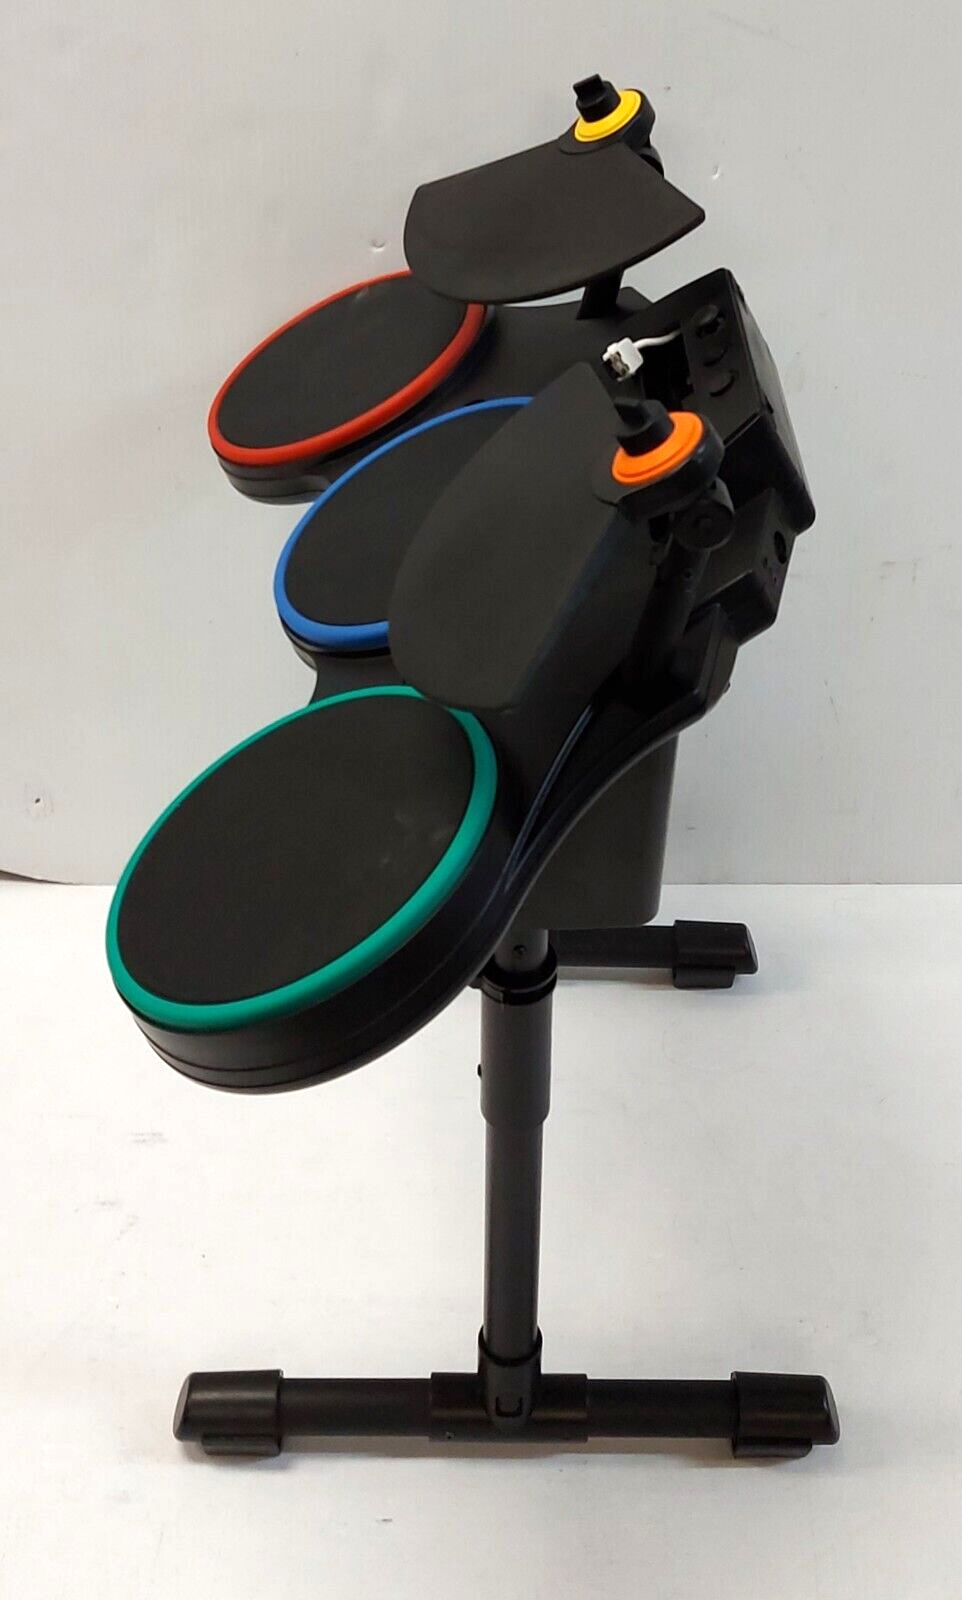 (N81003-11) Rock Band Drum Kit Controller w/Pedal